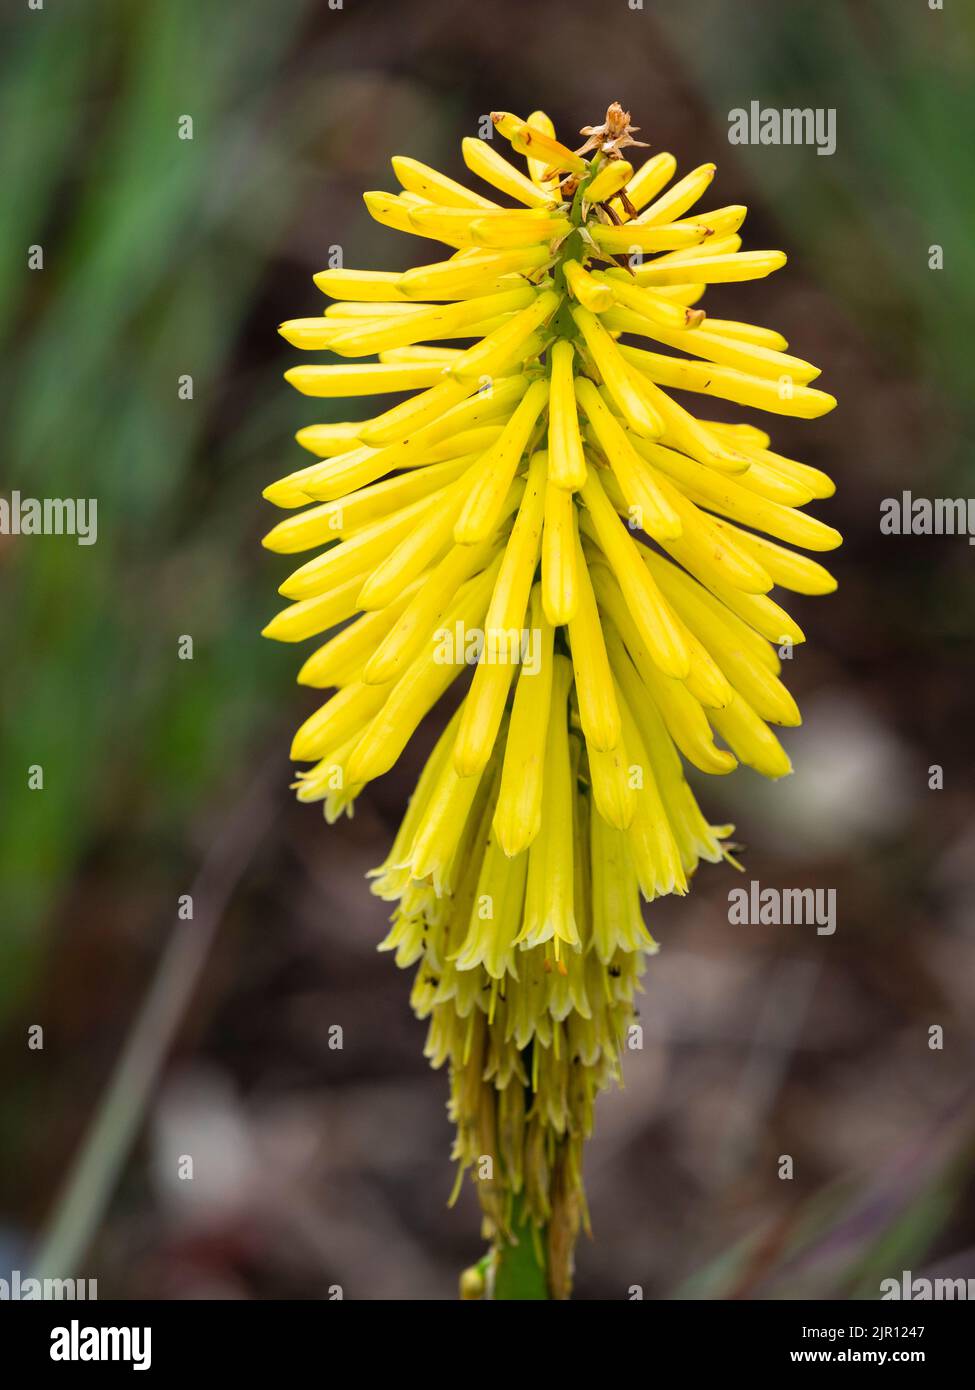 Spätsommer blühender Stachel, bekleidet mit röhrenförmigen gelben Blüten der winterharten Fackellilie, Kniphofia 'Wrexham Buttercup' Stockfoto